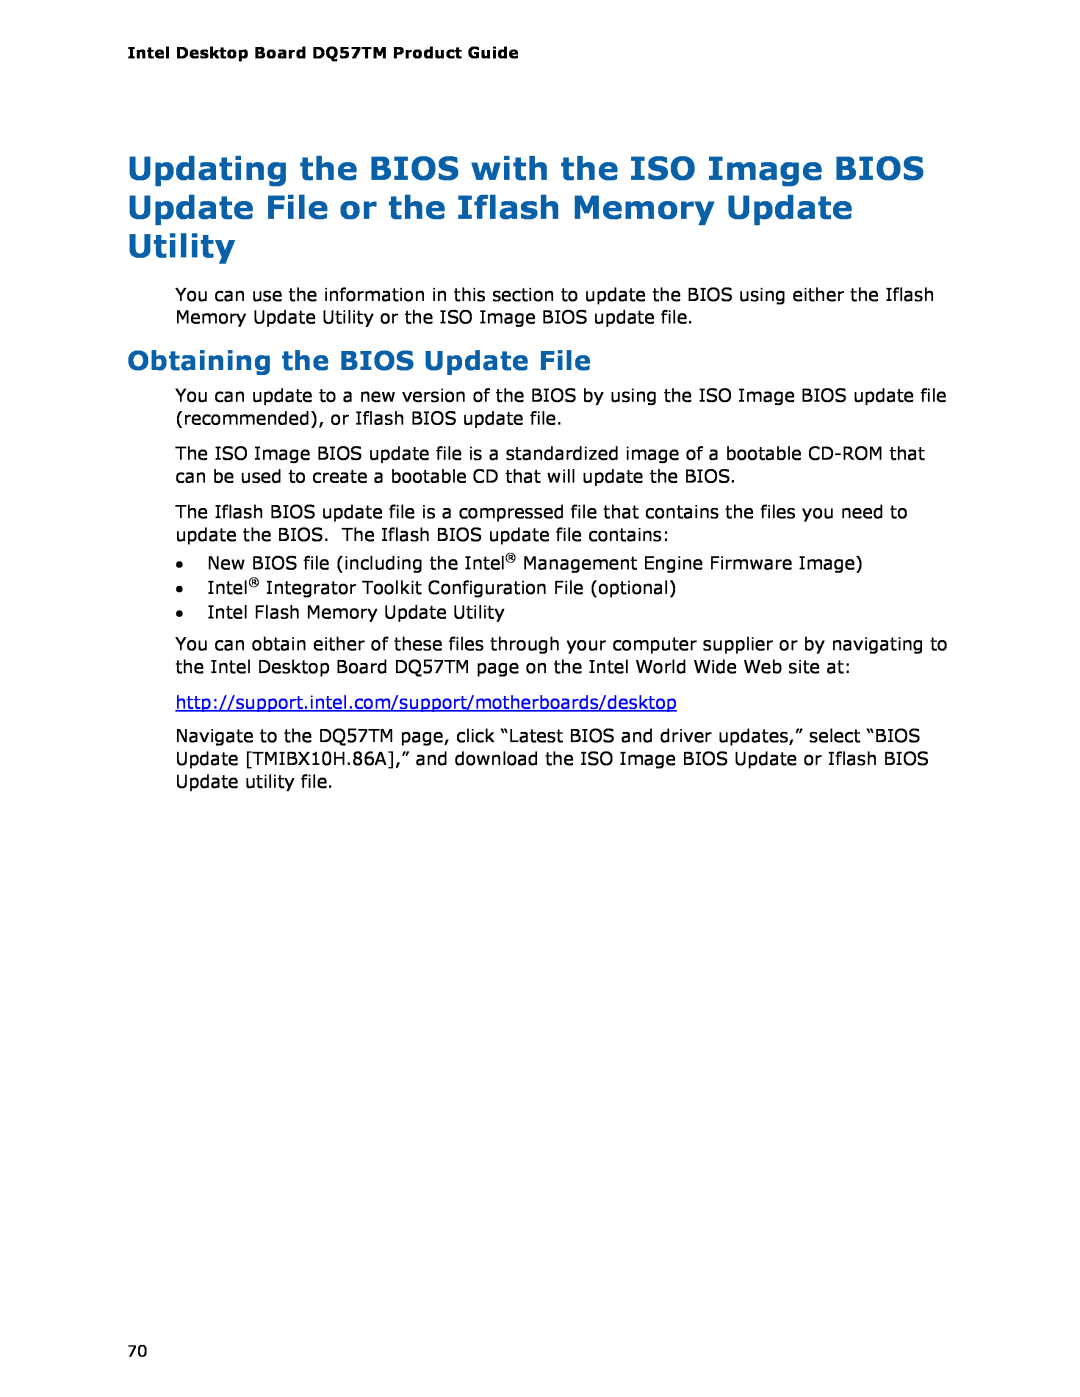 Intel DQ57TM manual Obtaining the BIOS Update File 